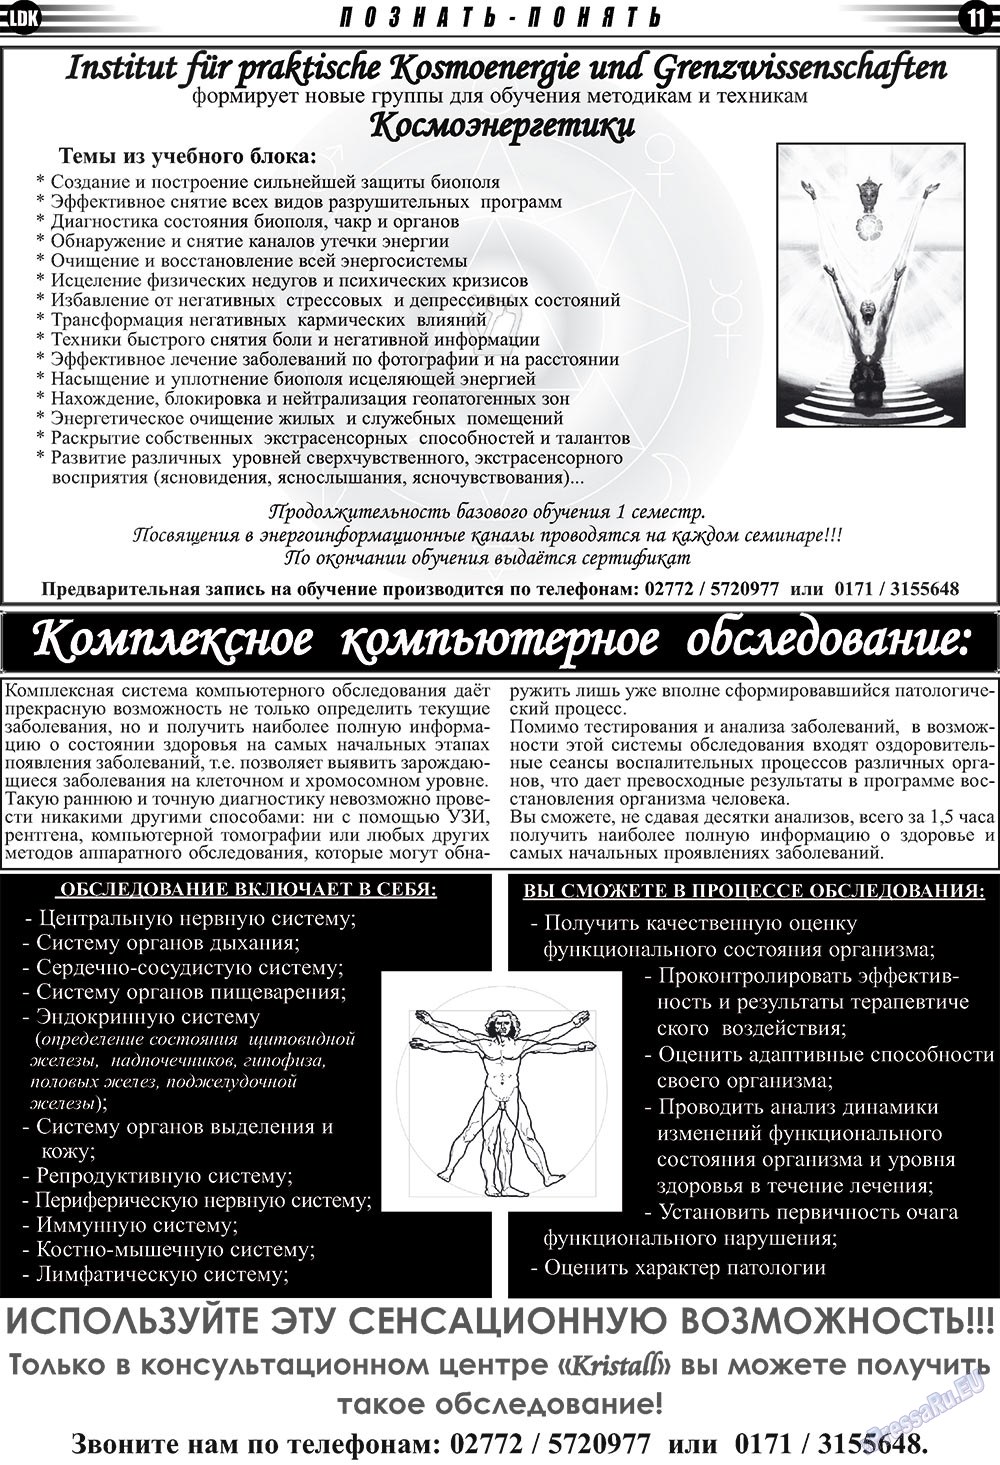 LDK по-русски, газета. 2009 №1 стр.11